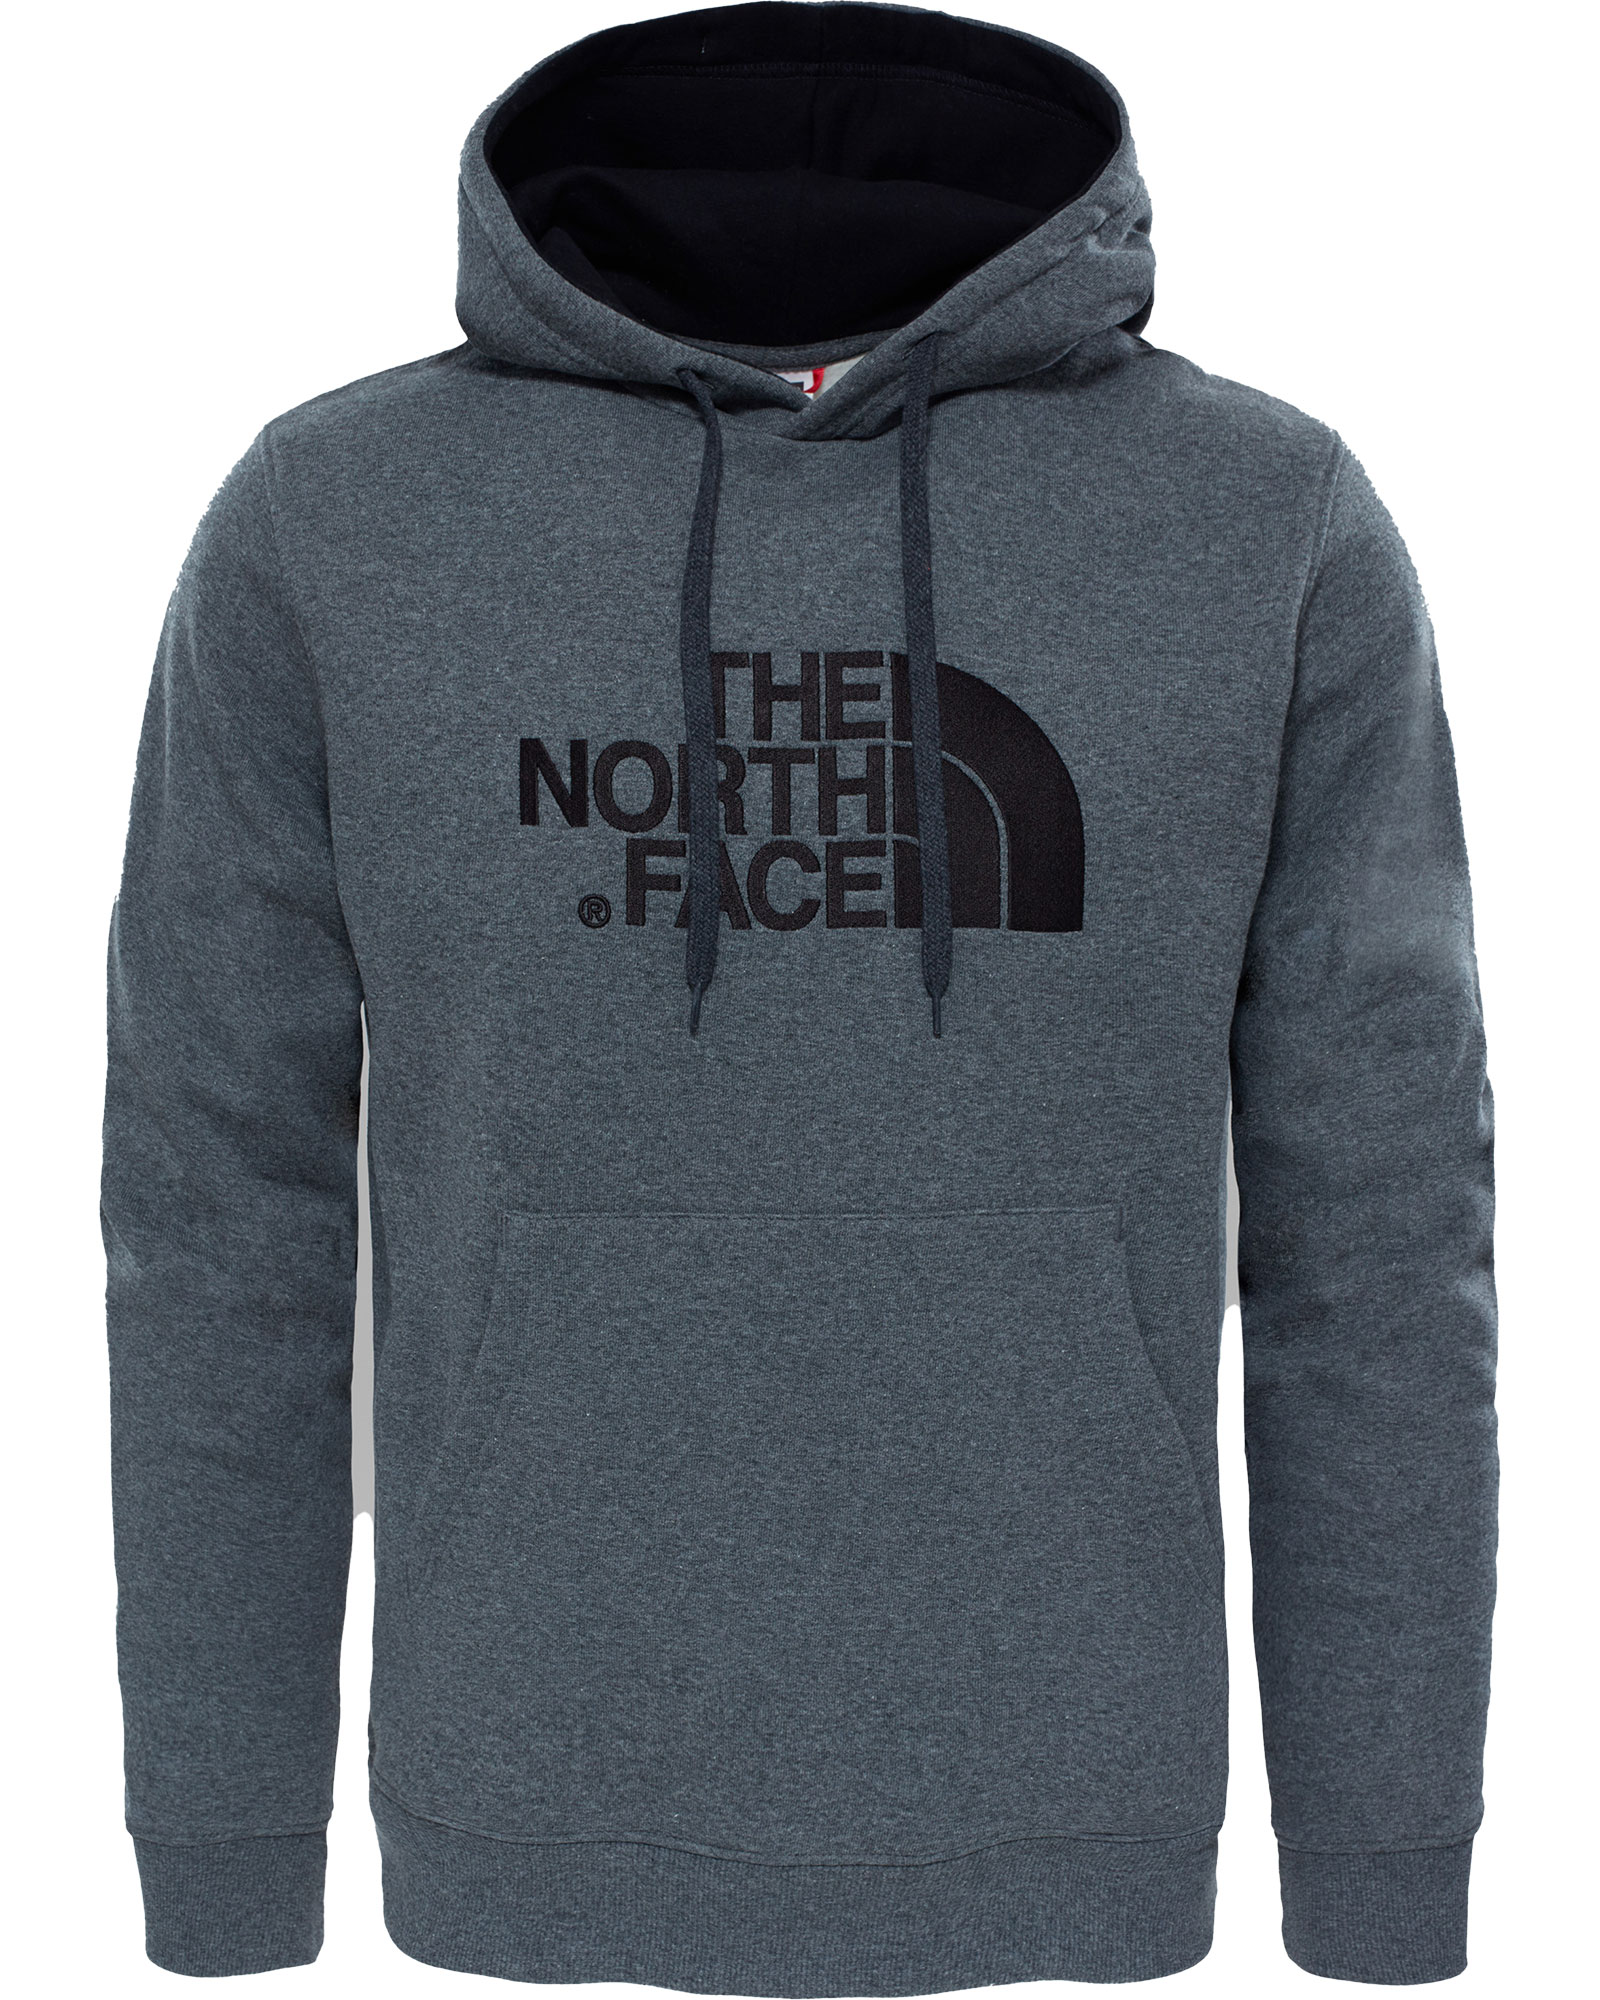 The North Face Drew Peak Men’s Hoodie - TNF Medium Grey Heather S